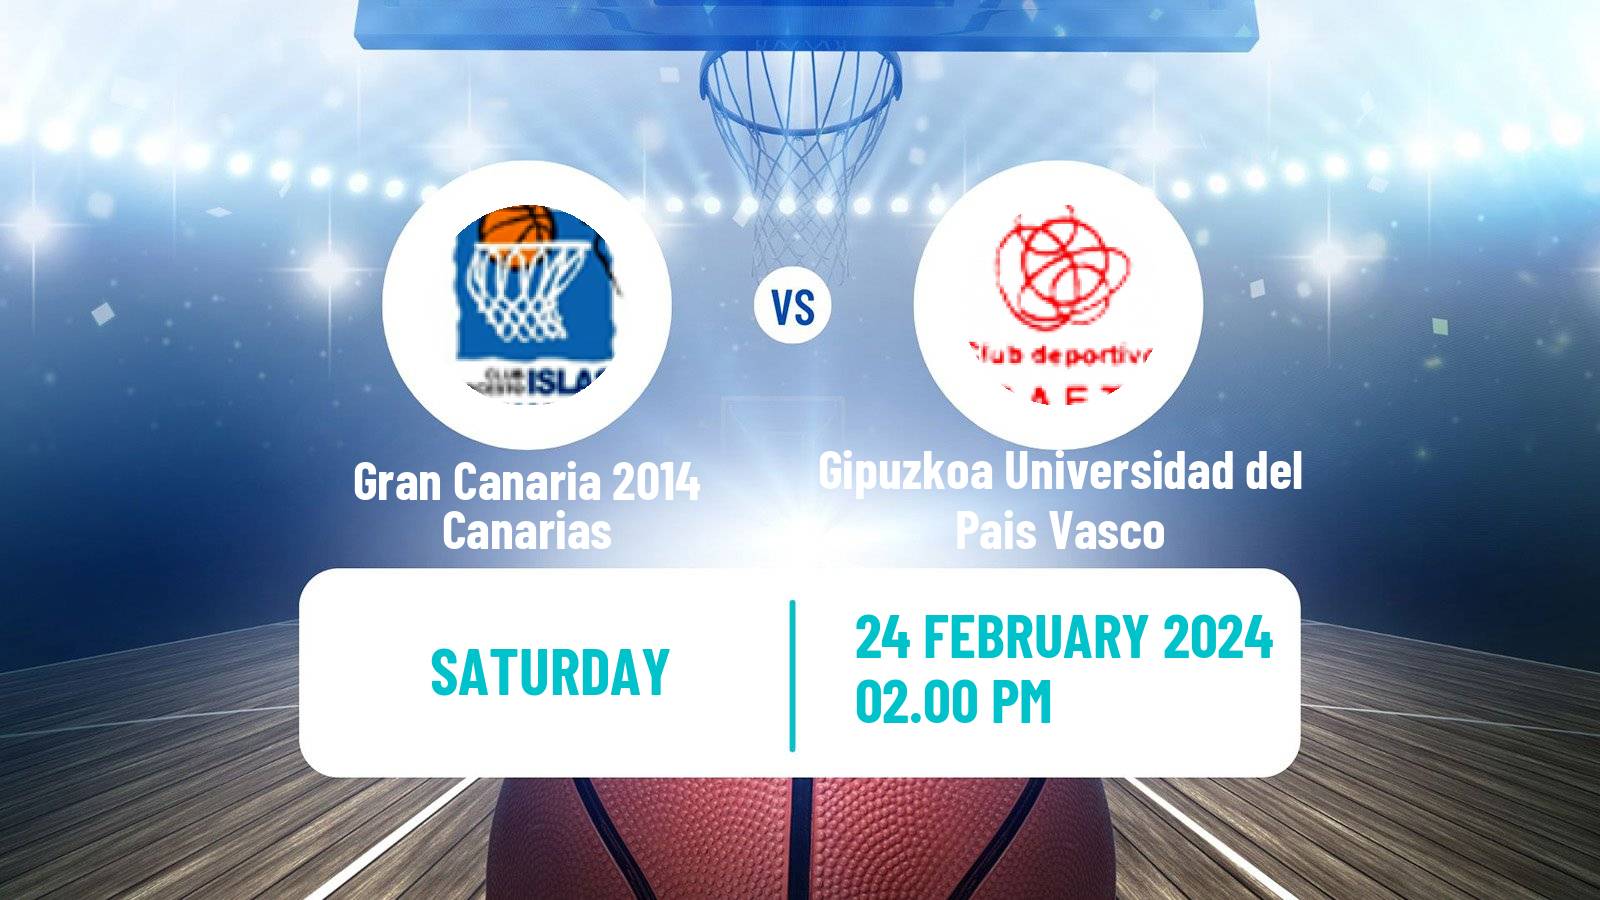 Basketball Spanish Liga Femenina Basketball Gran Canaria 2014 Canarias - Gipuzkoa Universidad del Pais Vasco